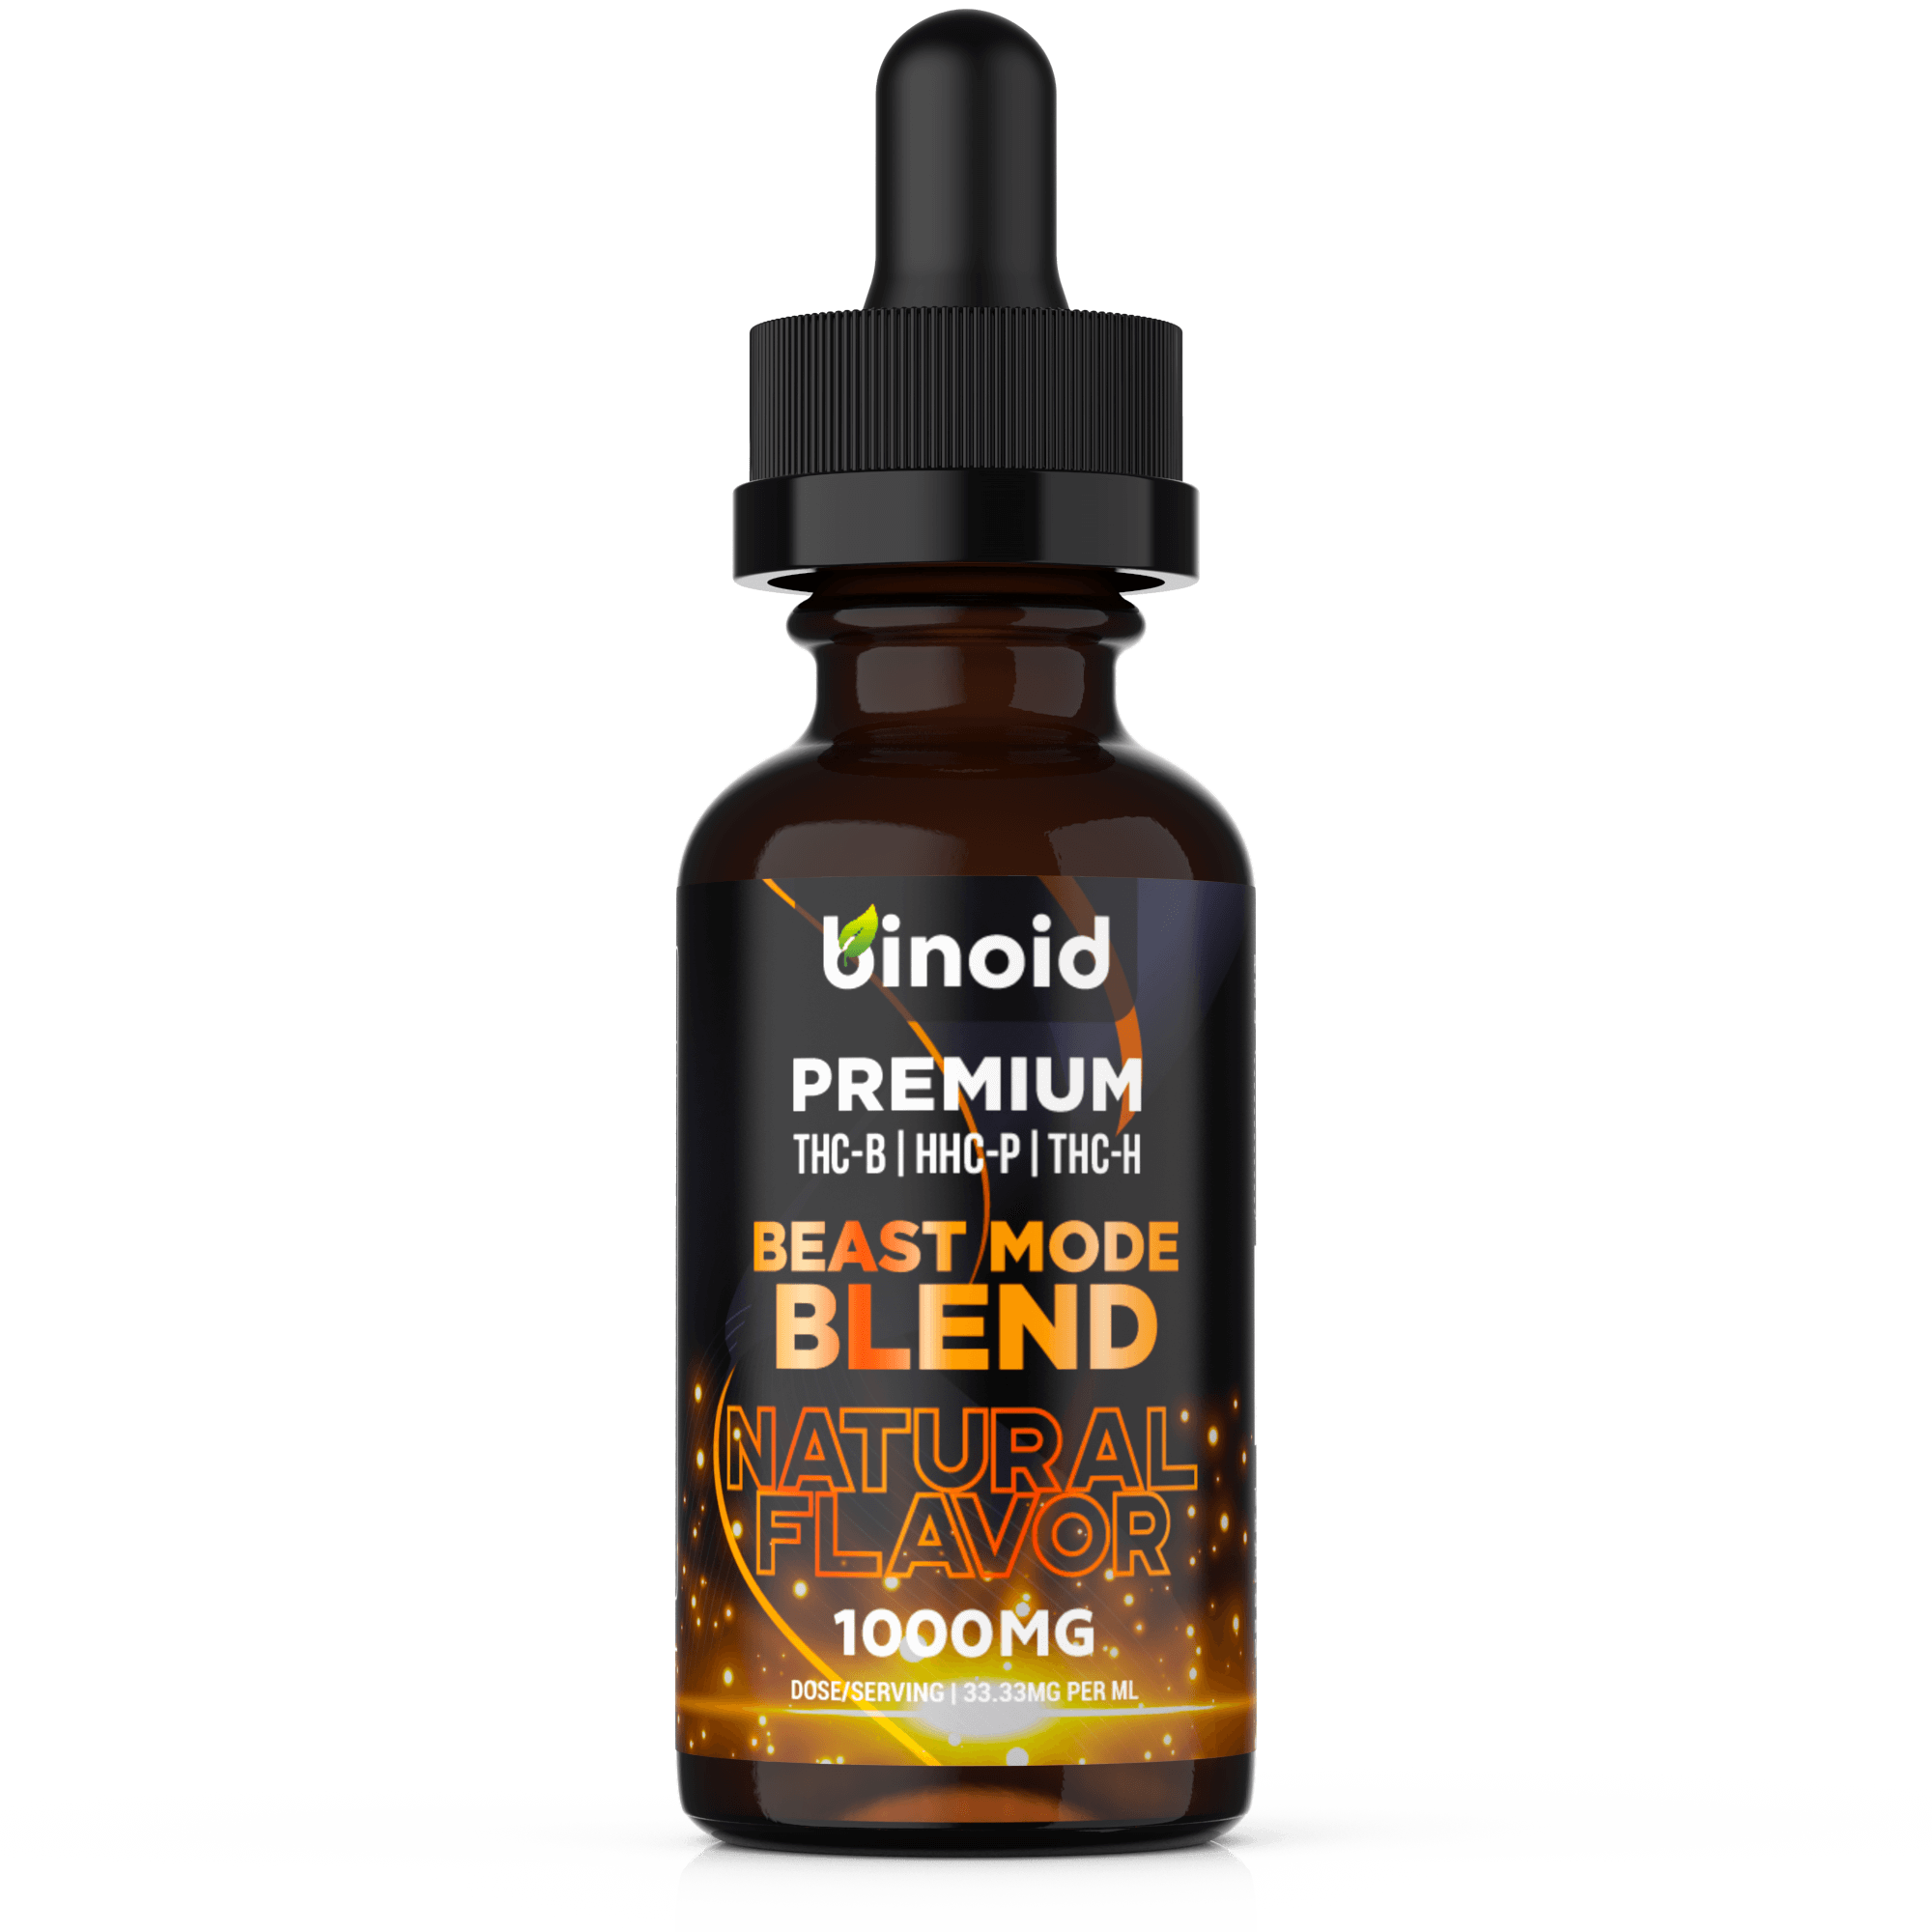 Binoid Beast Mode Blend Tincture – 1000mg Best Sales Price - Tincture Oil